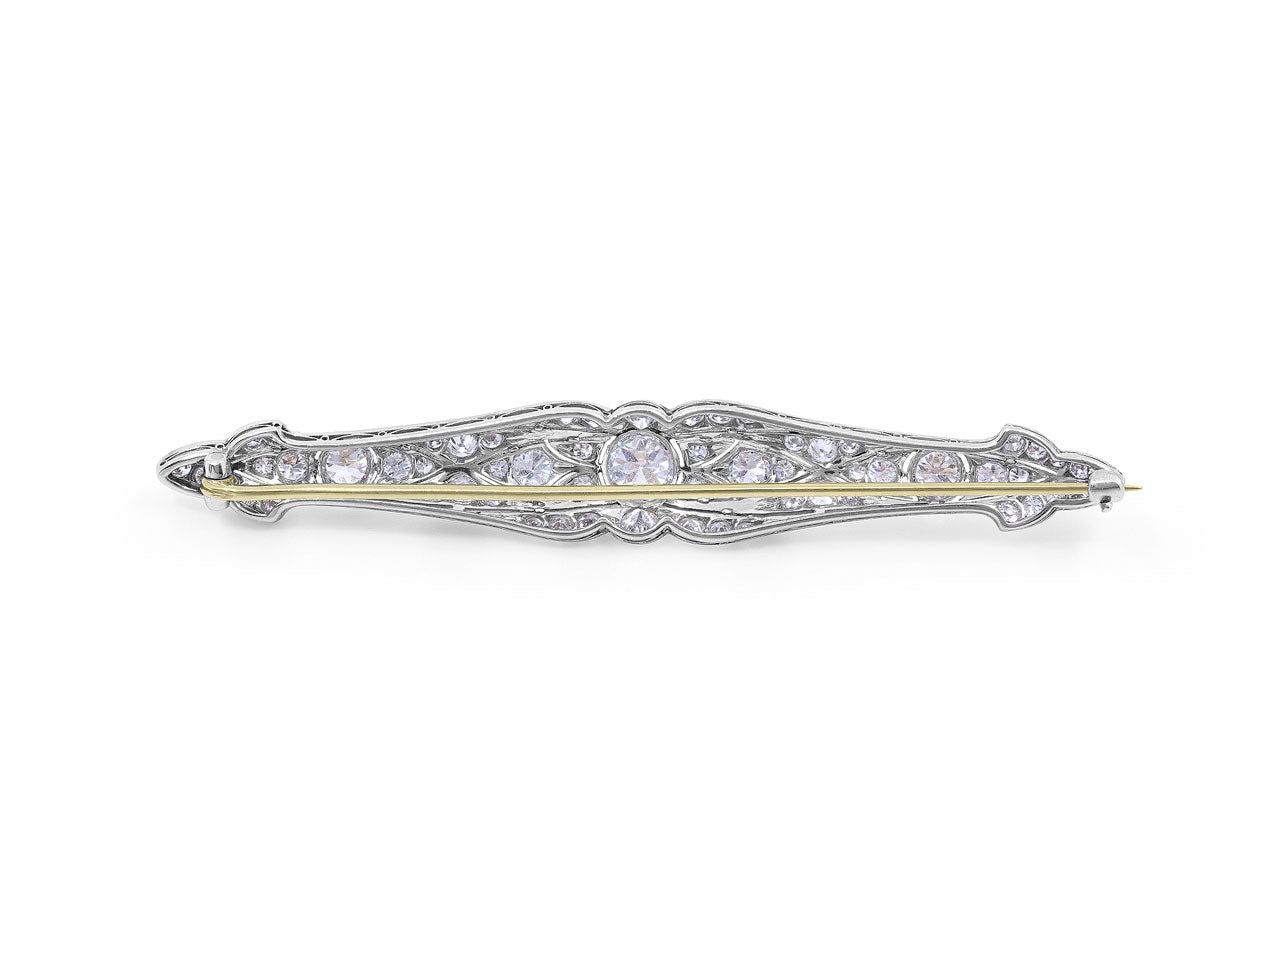 Art Deco Transitional Cut Diamond Bar Brooch in Platinum